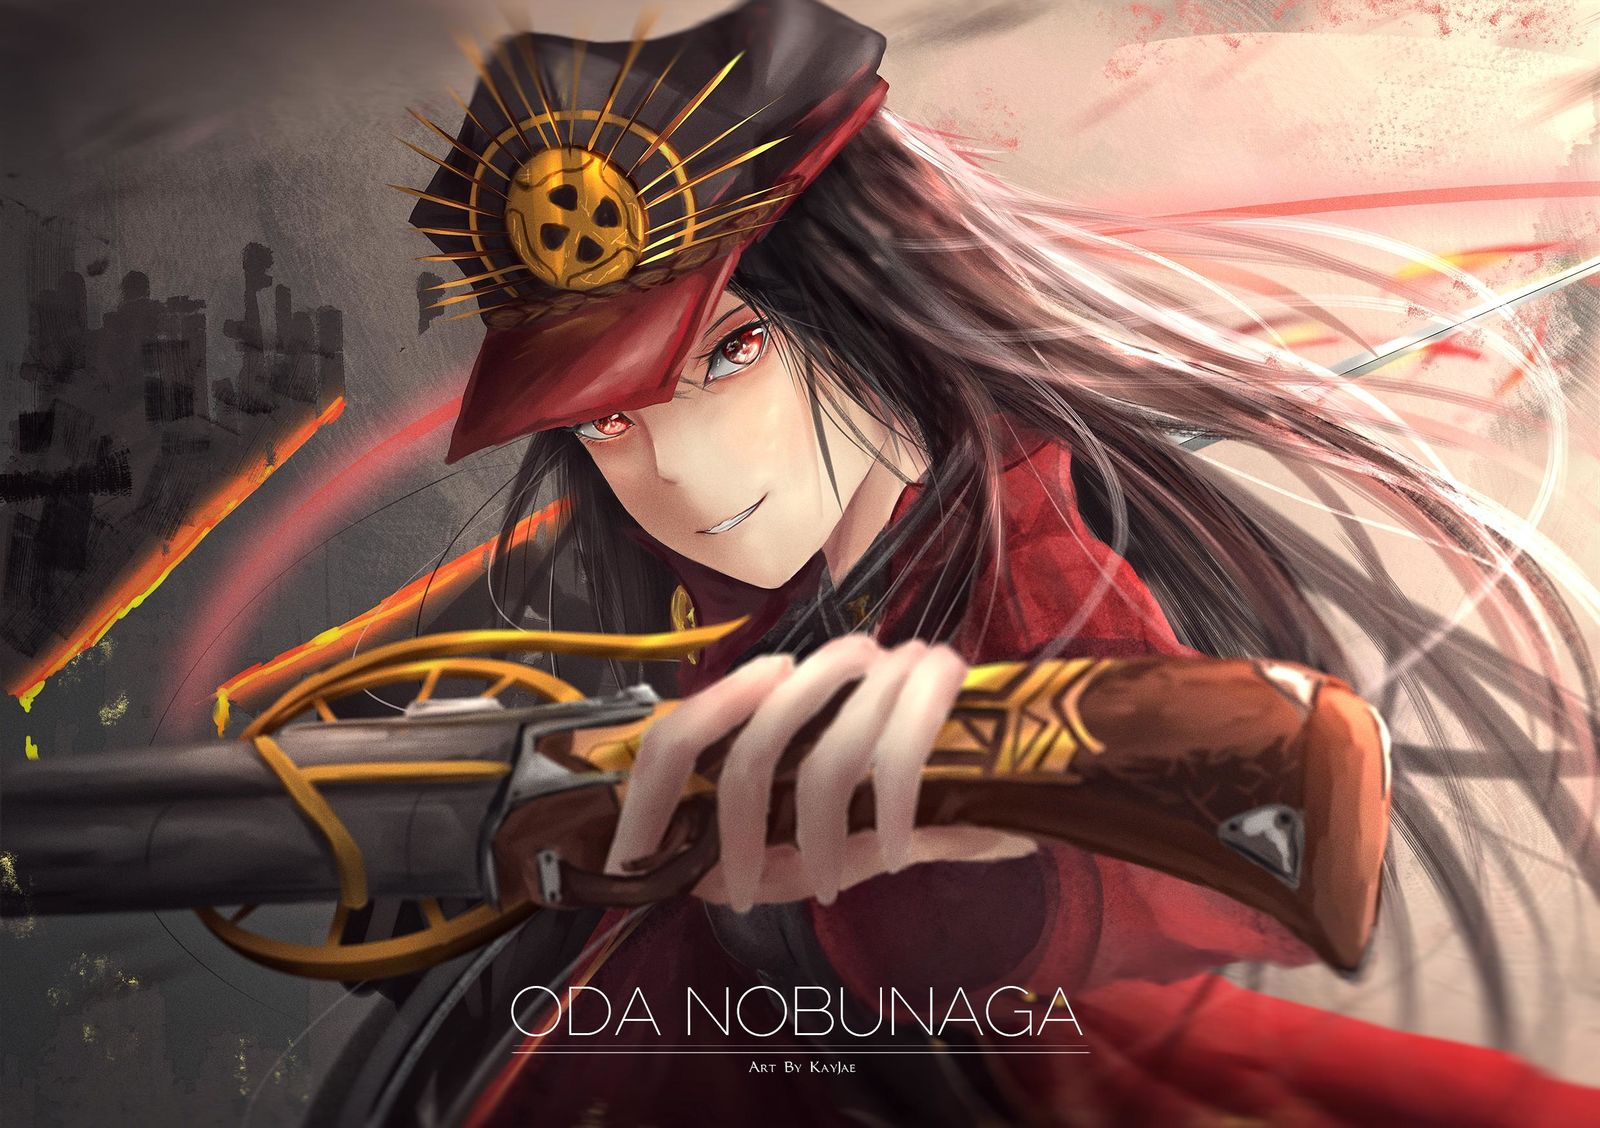 Oda Nobunaga插画图片壁纸